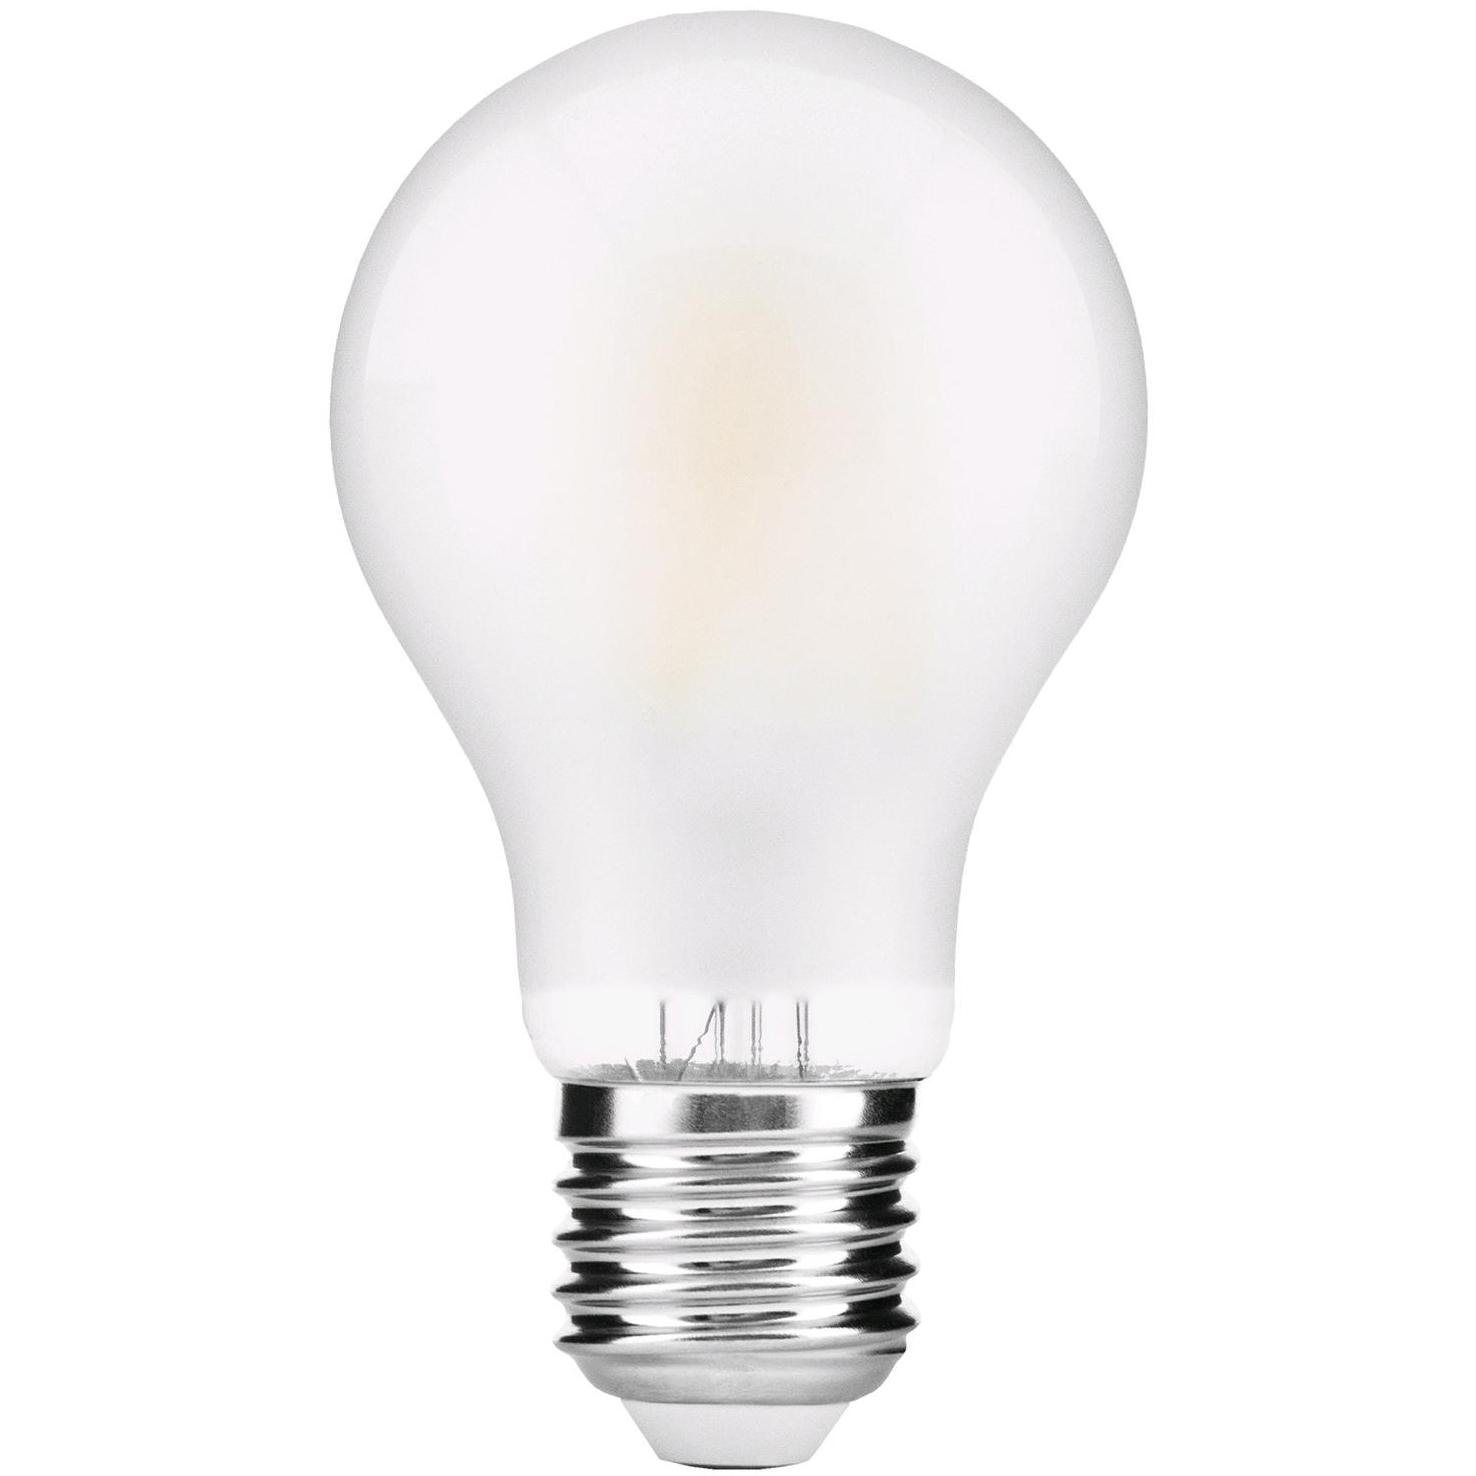 geschenk Ideaal media Filament Led Lamp - 1500 Lumen - Philips - Lamptype: E27 - Led, Vermogen:  11 Watt - 230 Volt, Lichtsterkte: 1500 lumen, Afmetingen: Ø70mm/H124mm,  Lichtkleur: Extra warm wit - 2700 K.